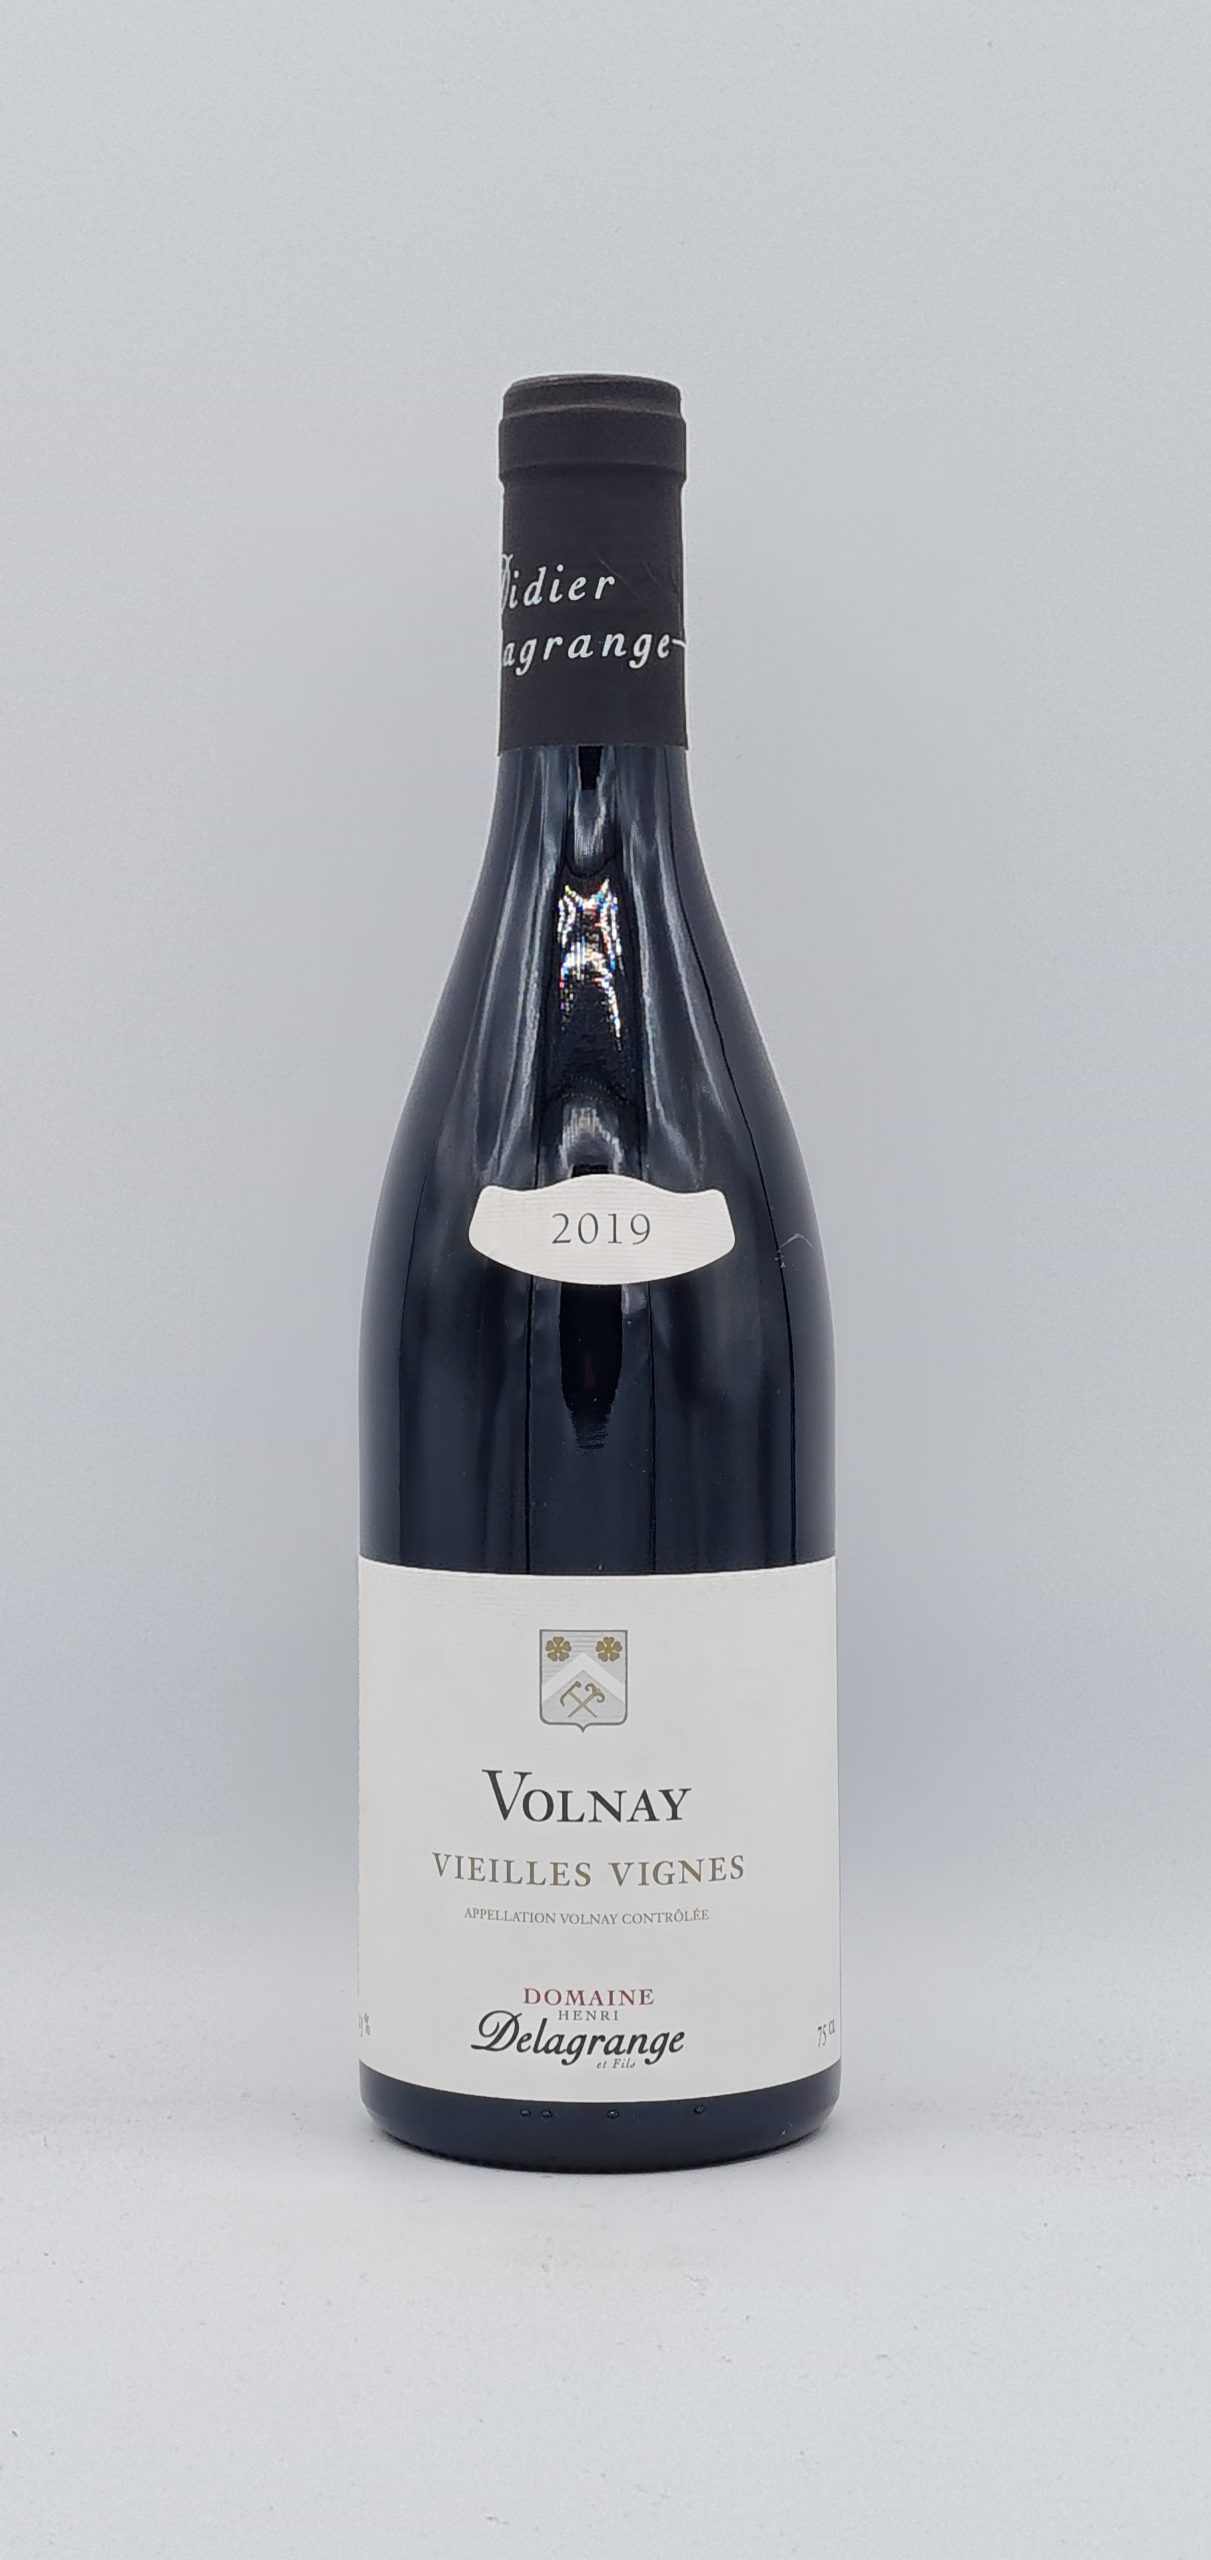 Volnay “Vieilles Vignes” 2019 Domaine Delagrange